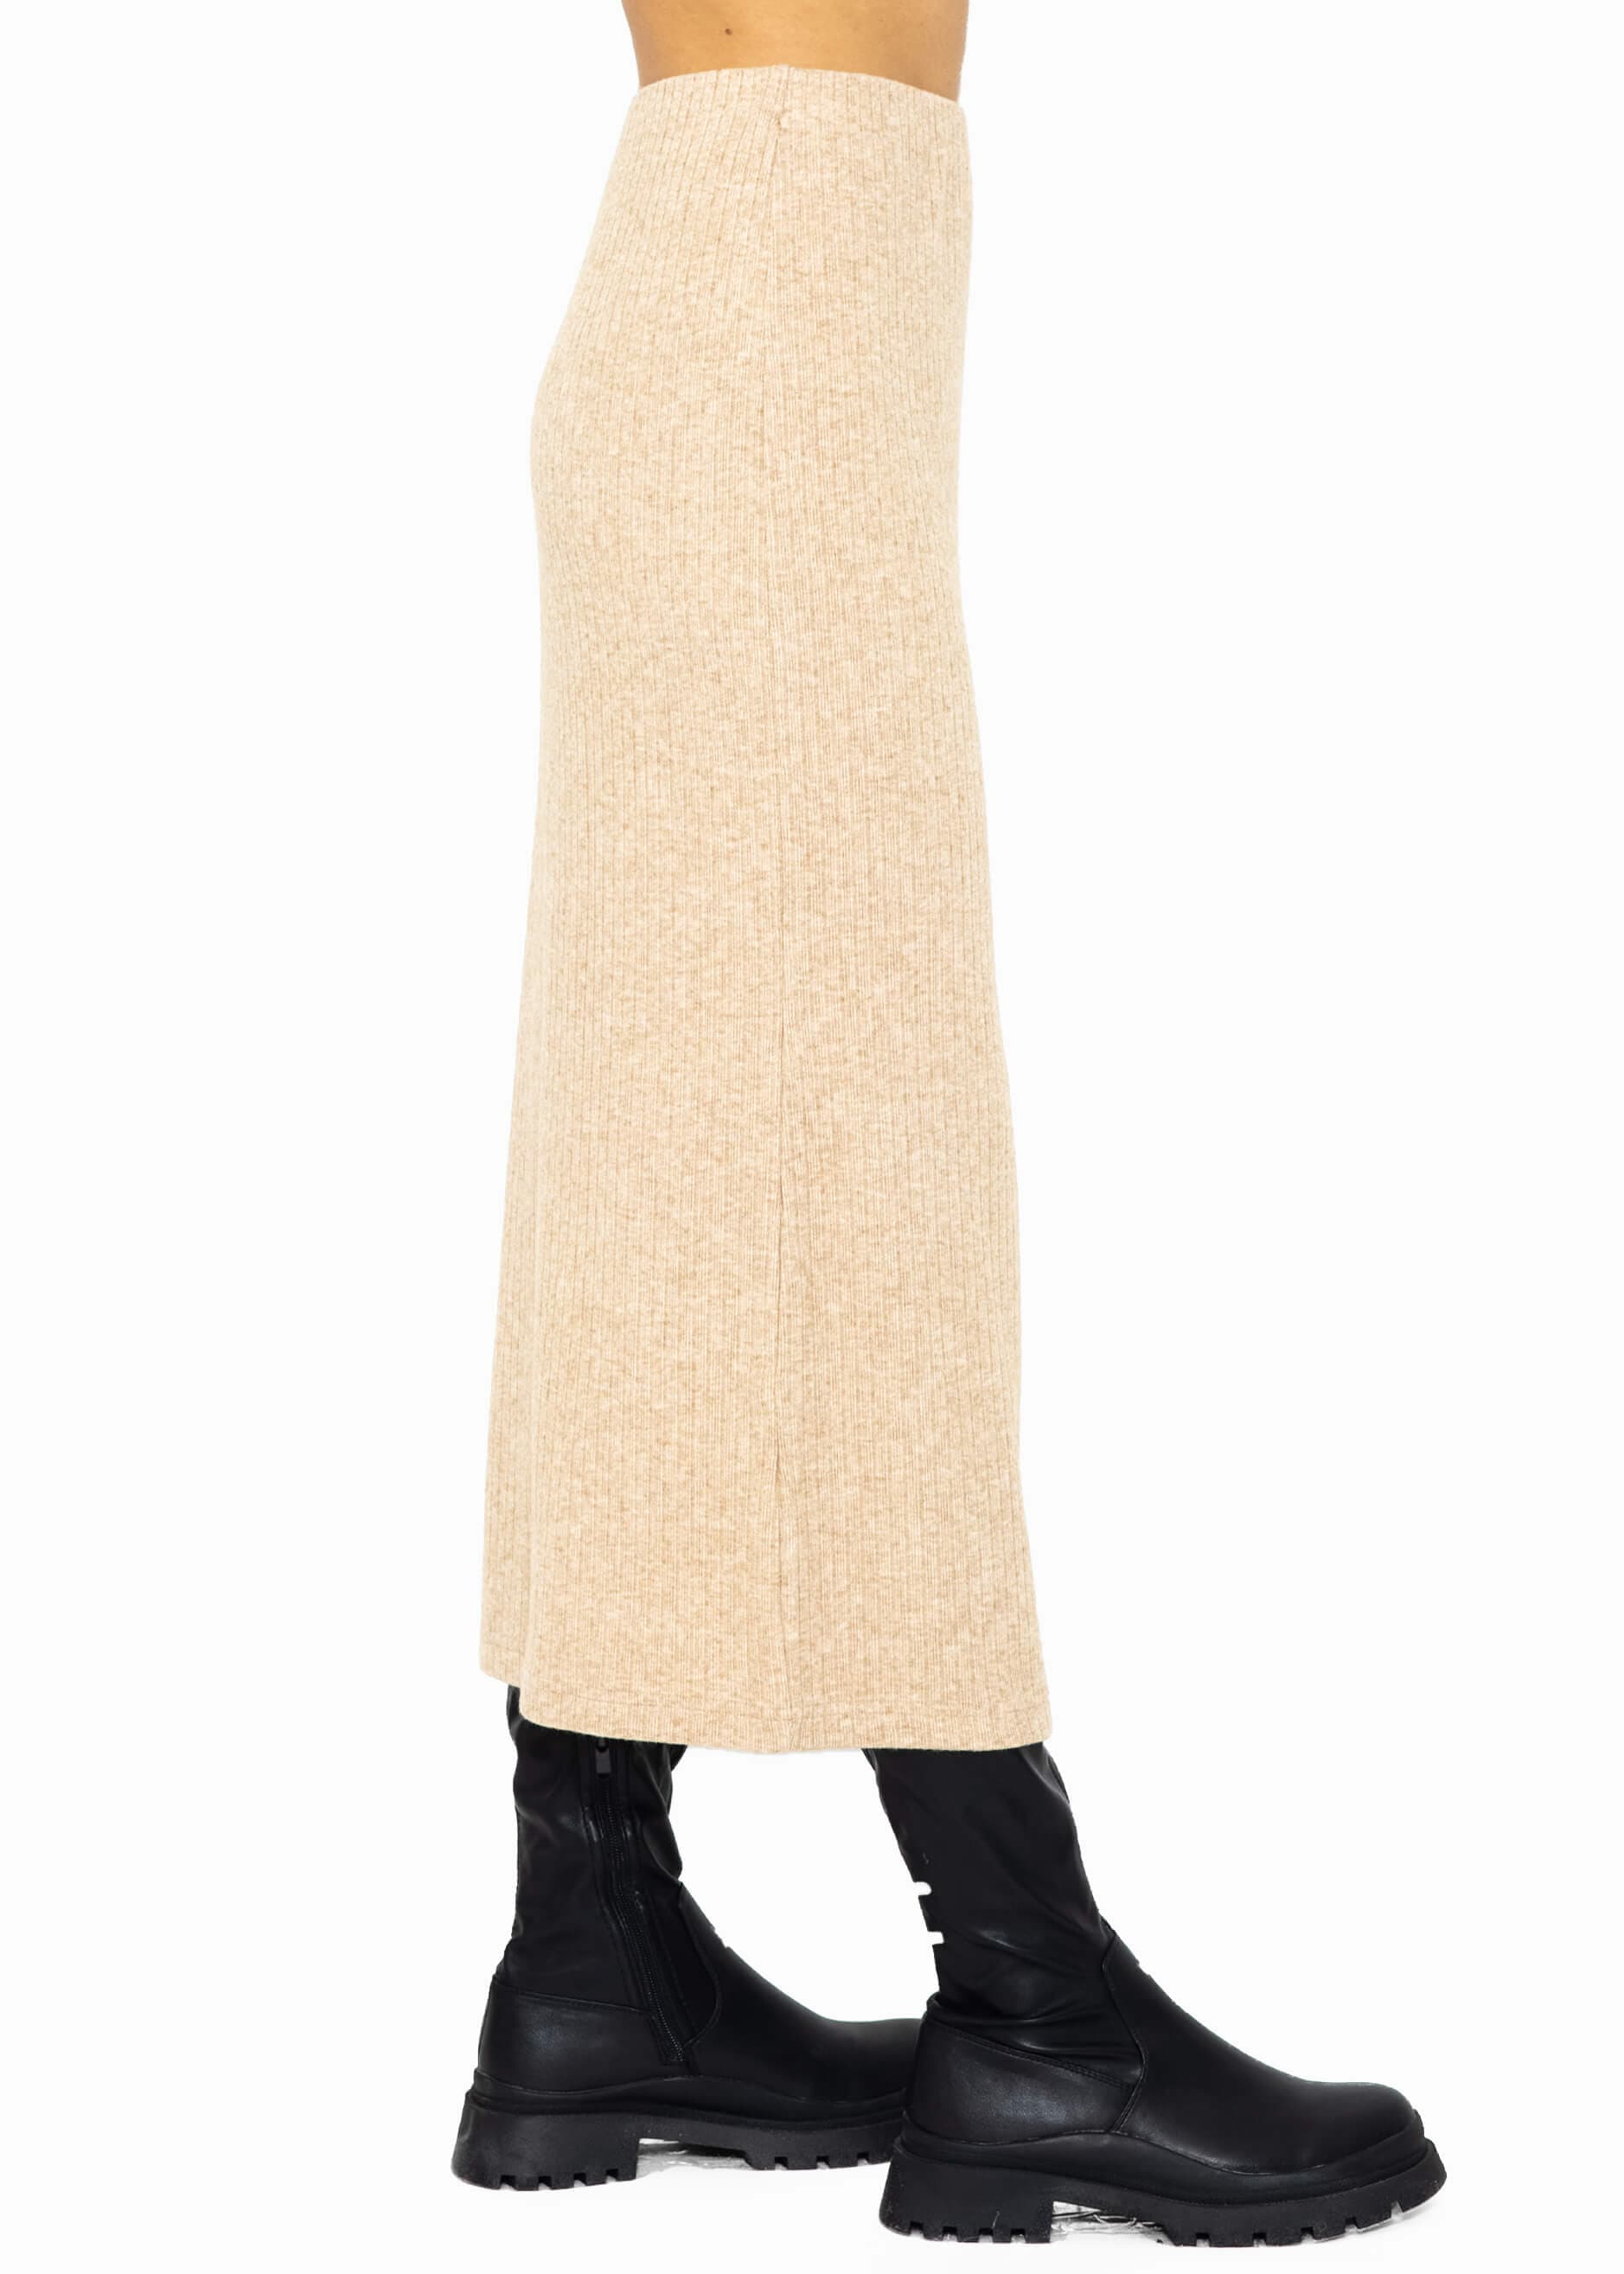 Длинная юбка SASSYCLASSY Maxi (Röcke), бежевый